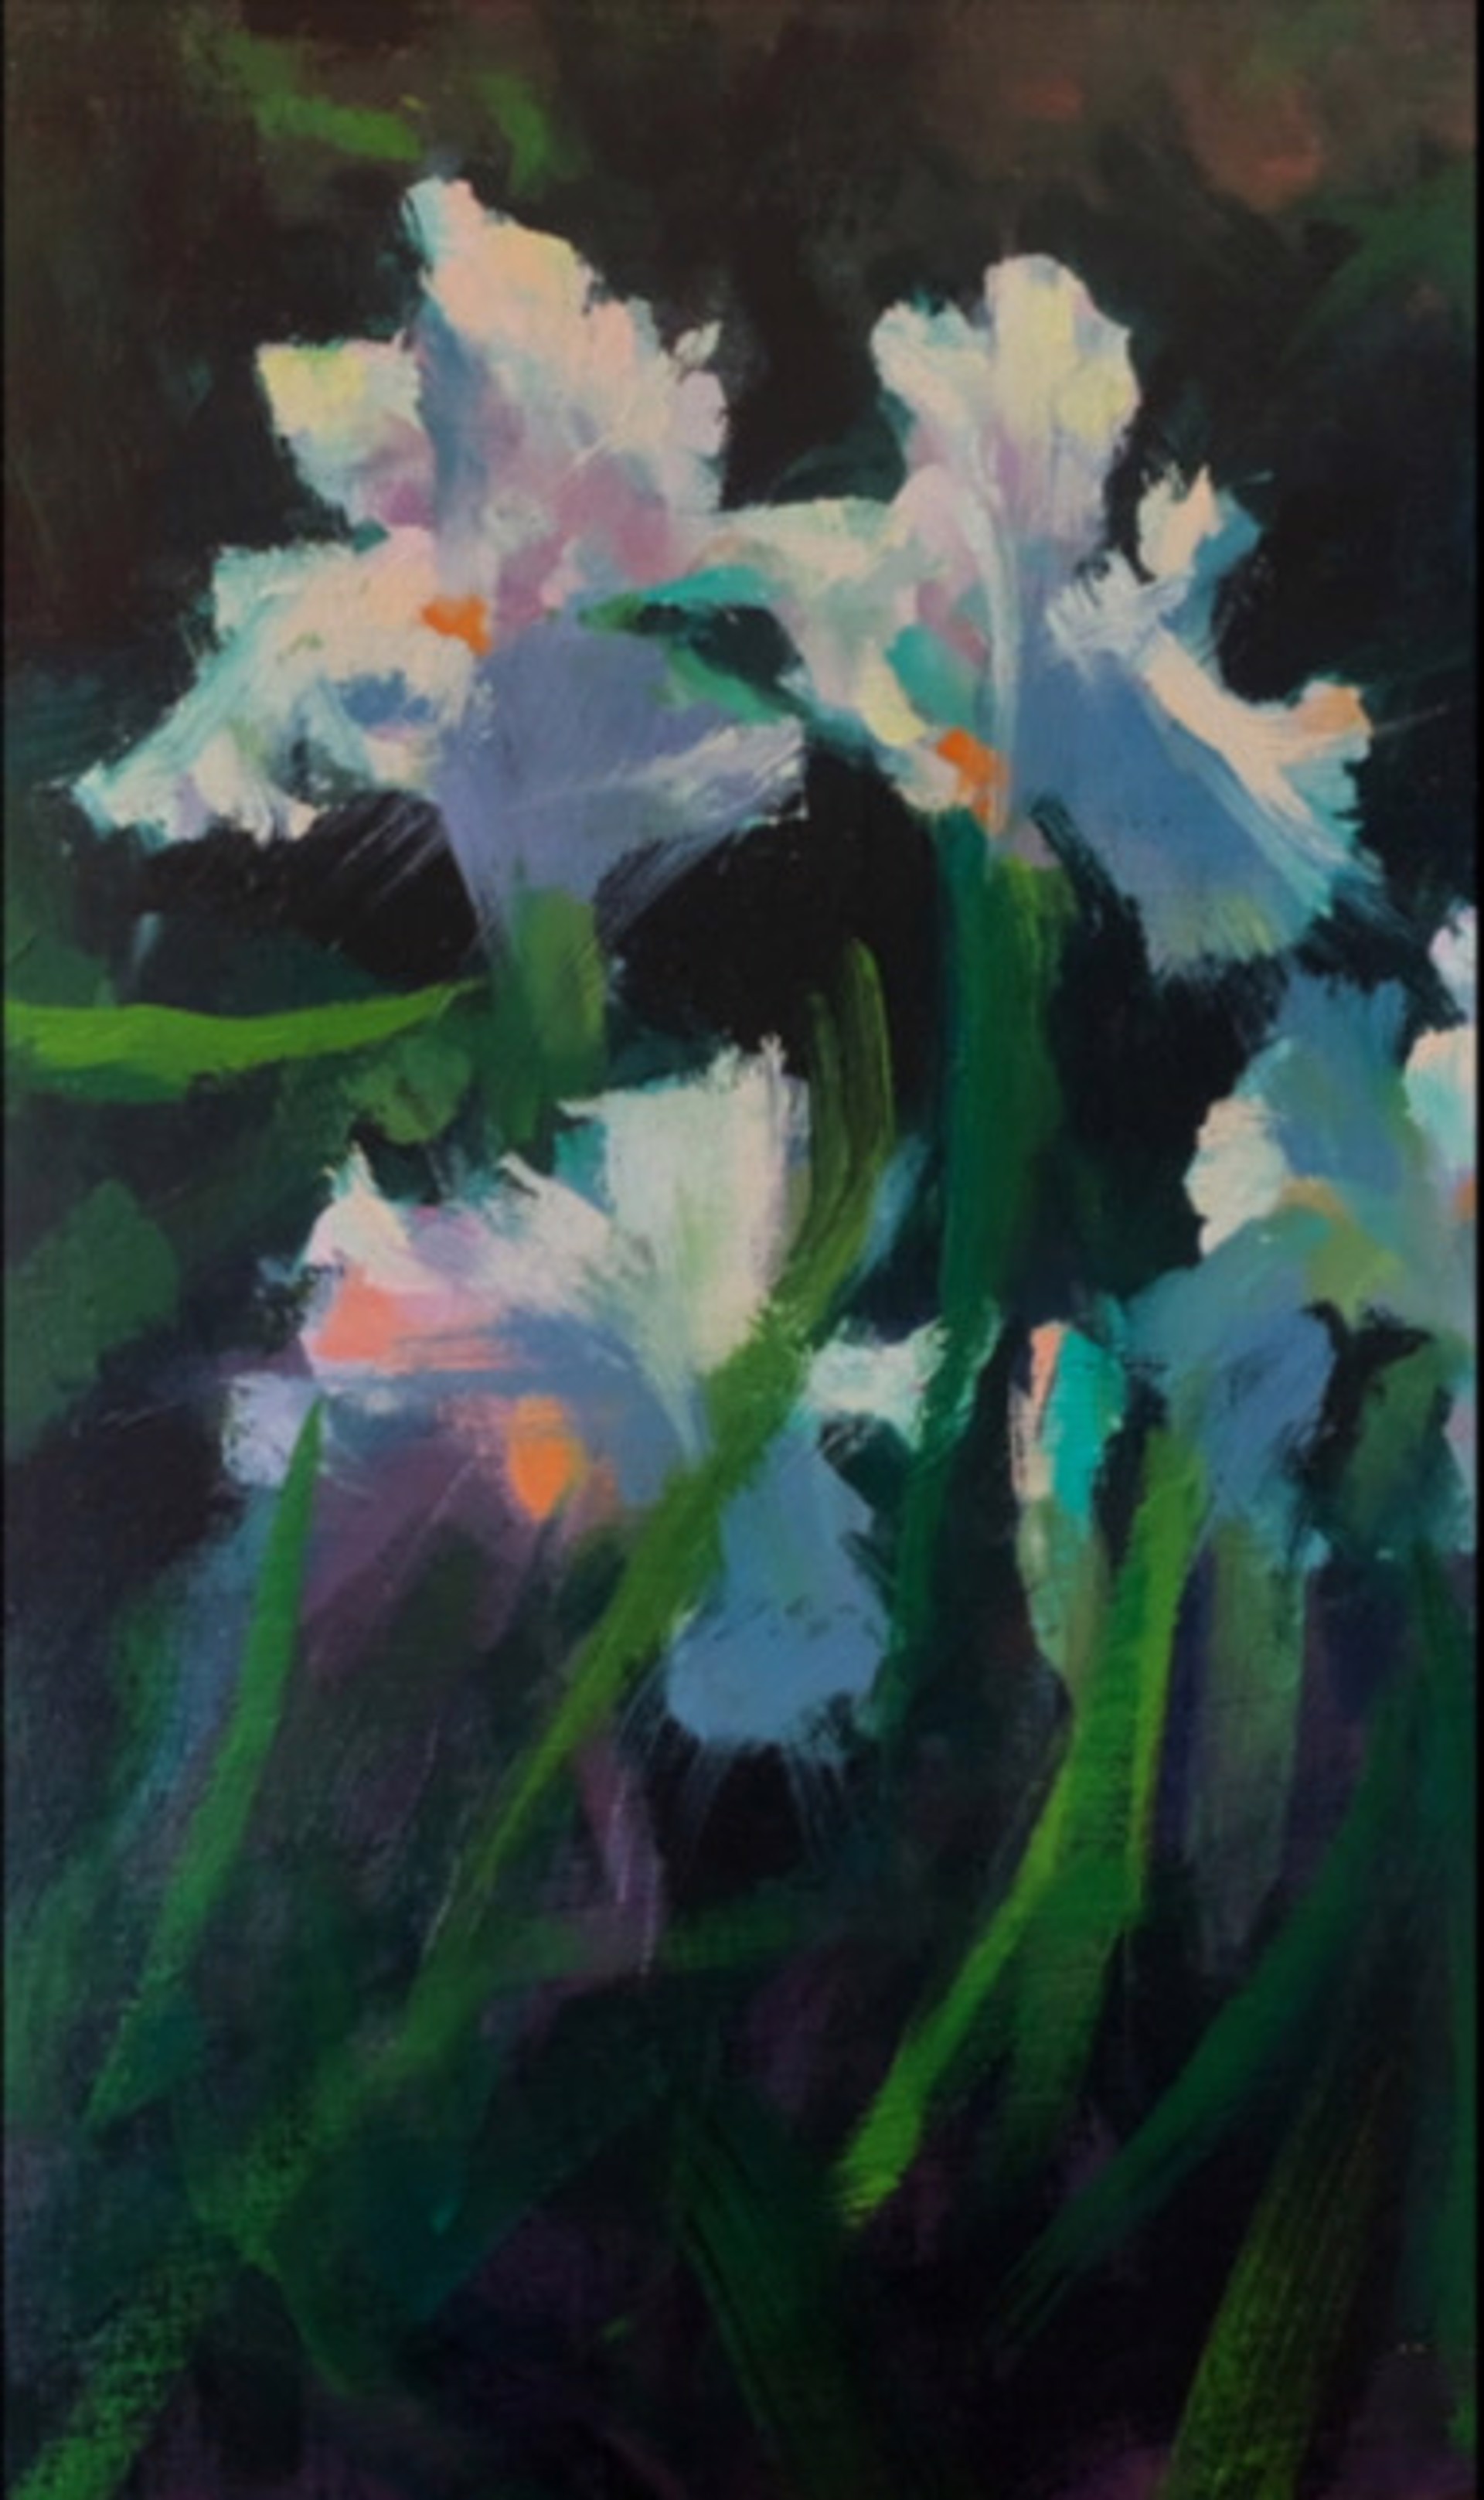 Irises from My Garden by Margaret Dyer